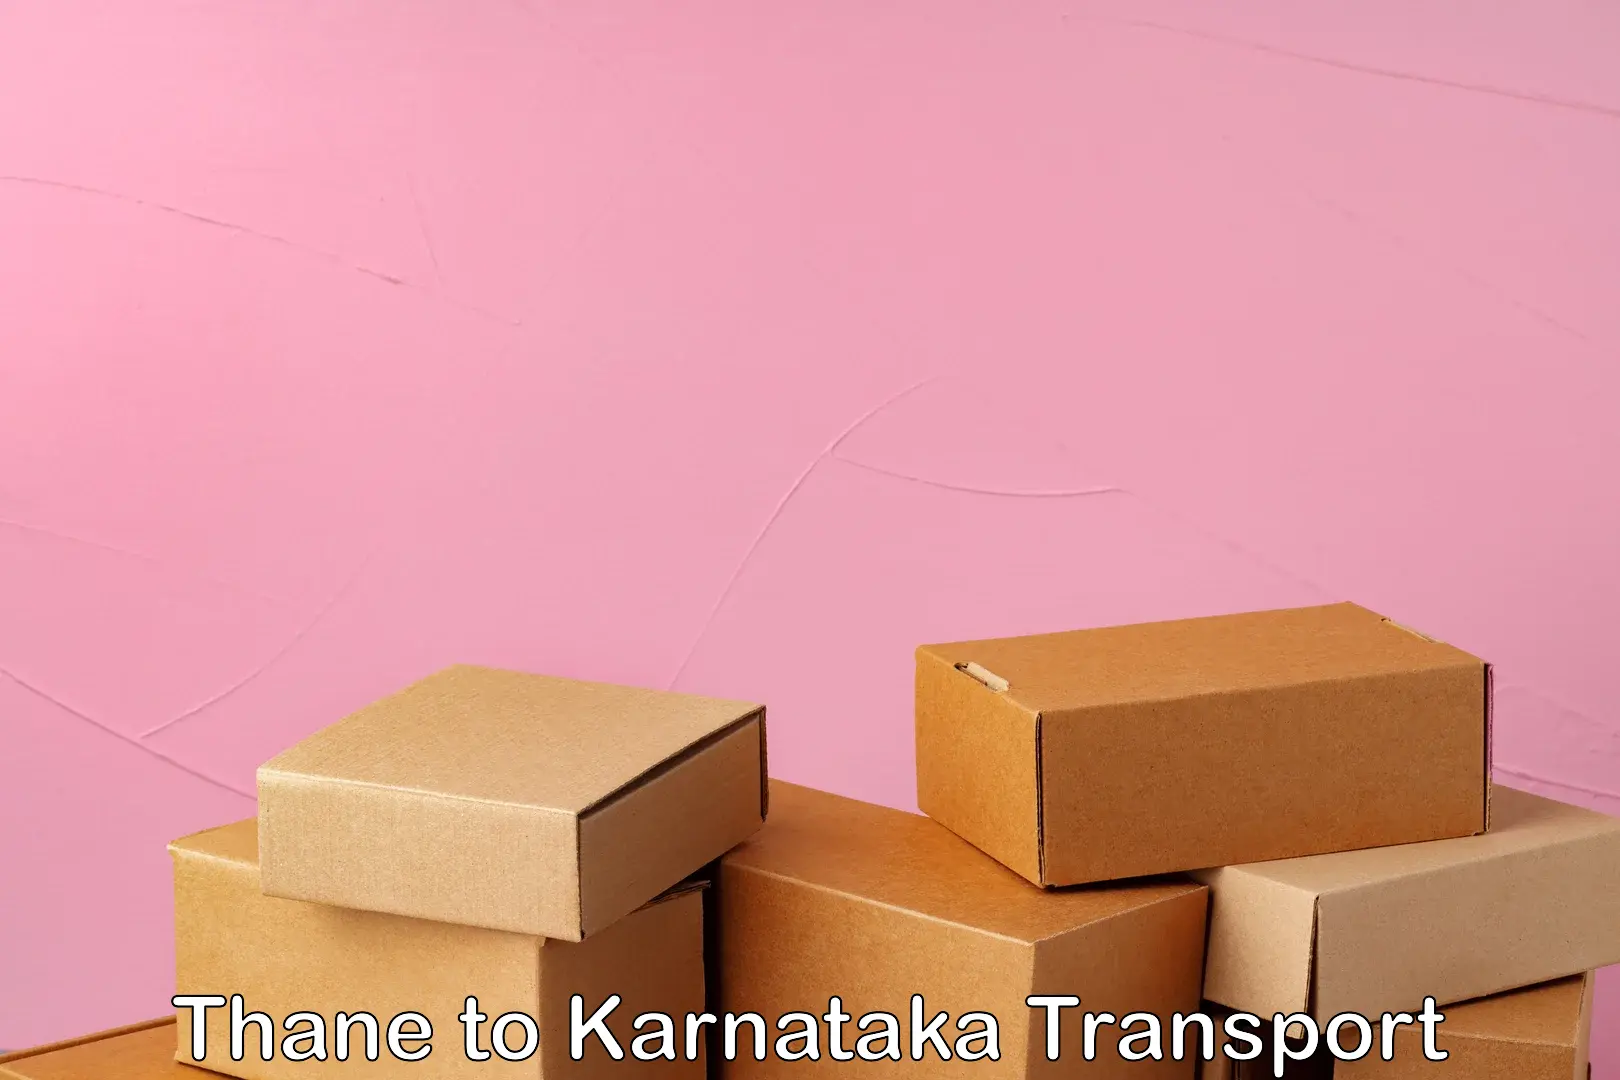 Online transport service Thane to Karnataka